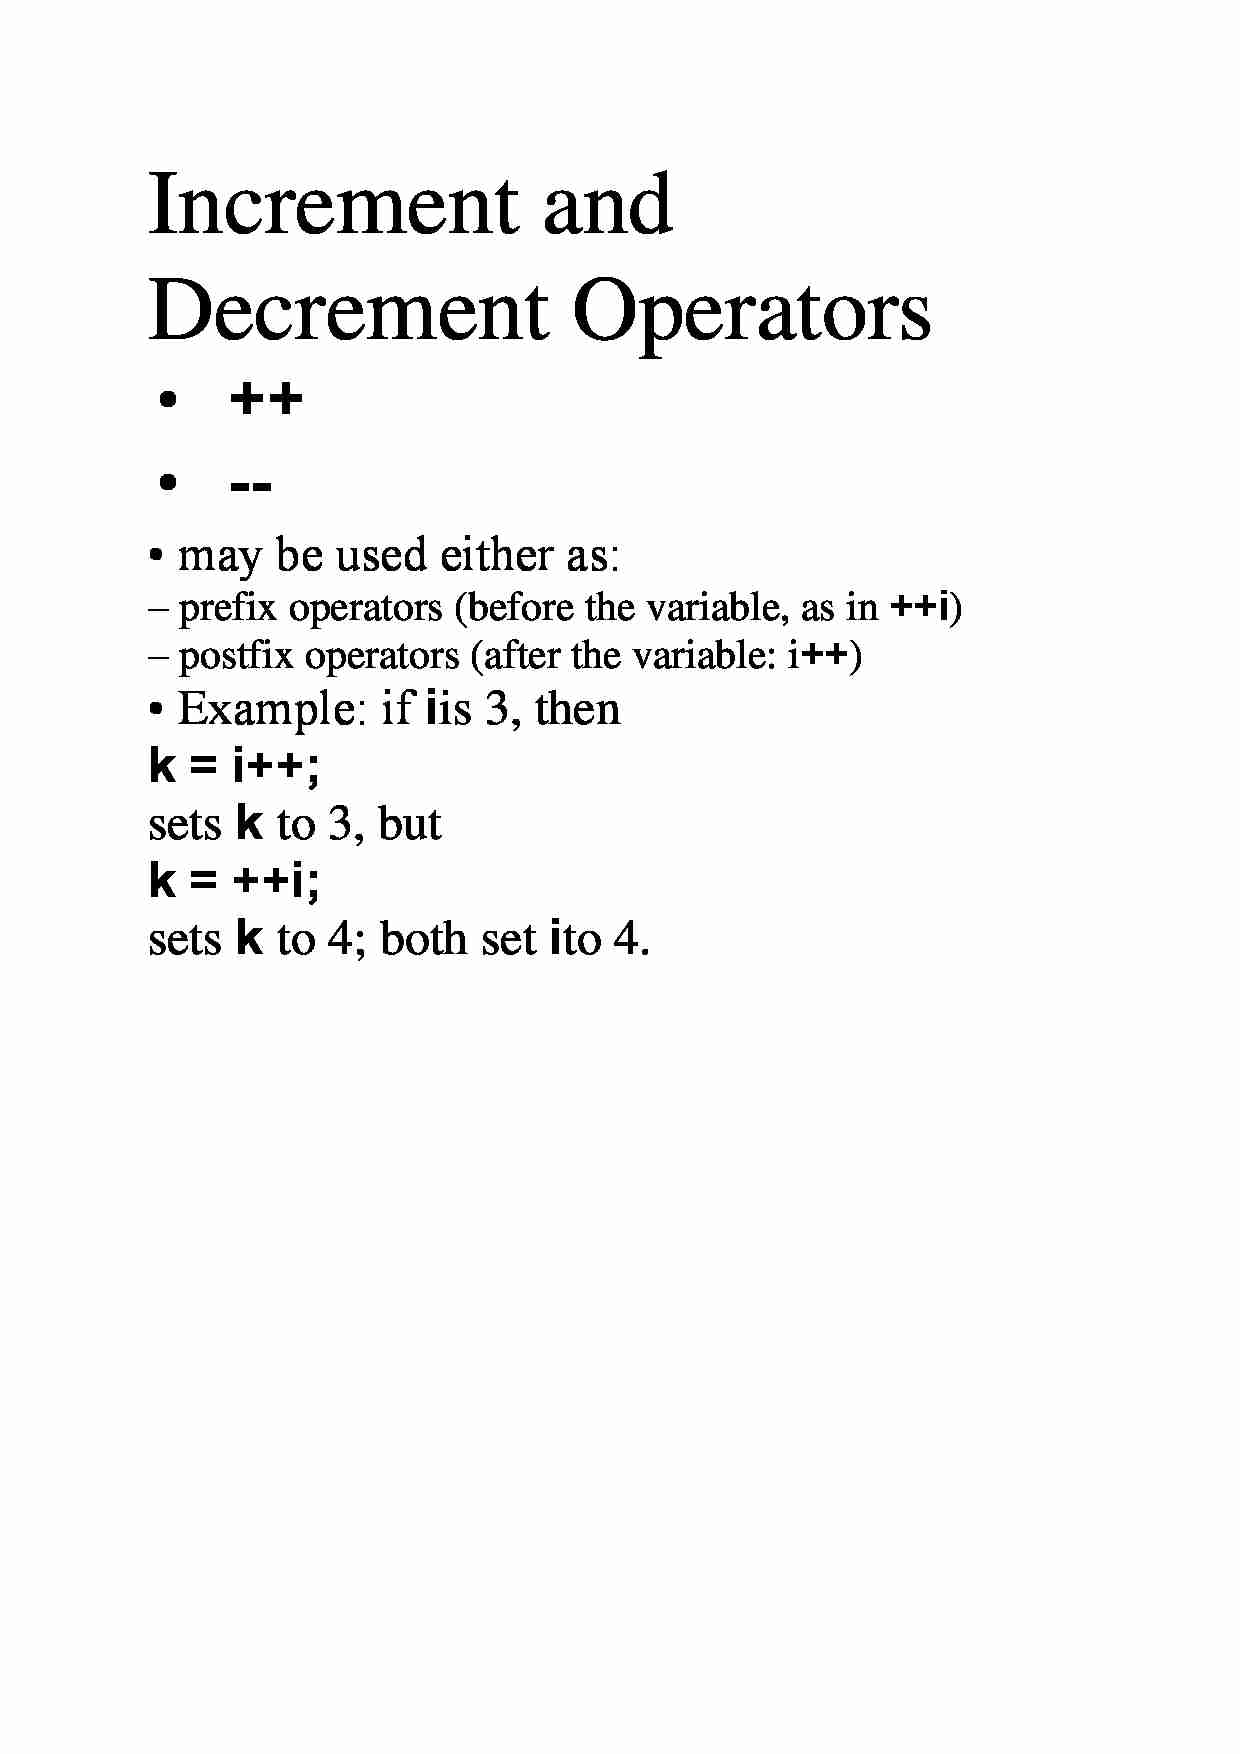 Increment and Decrement Operators - strona 1